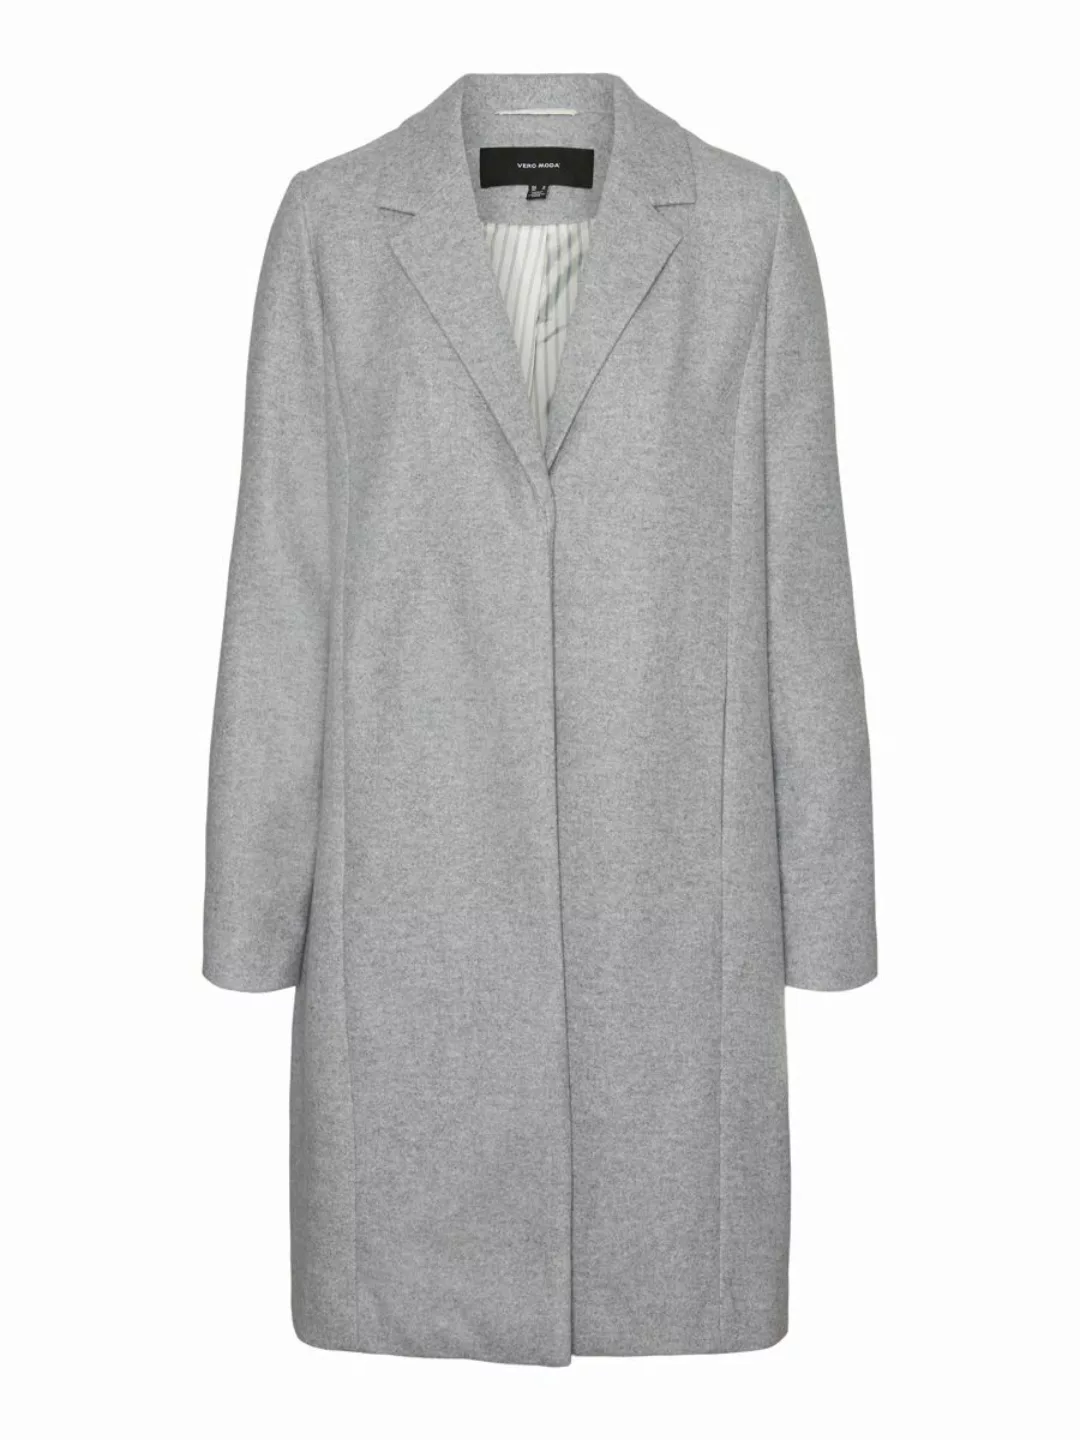 VERO MODA Übergangsjacke Mantel Damen Grau günstig online kaufen